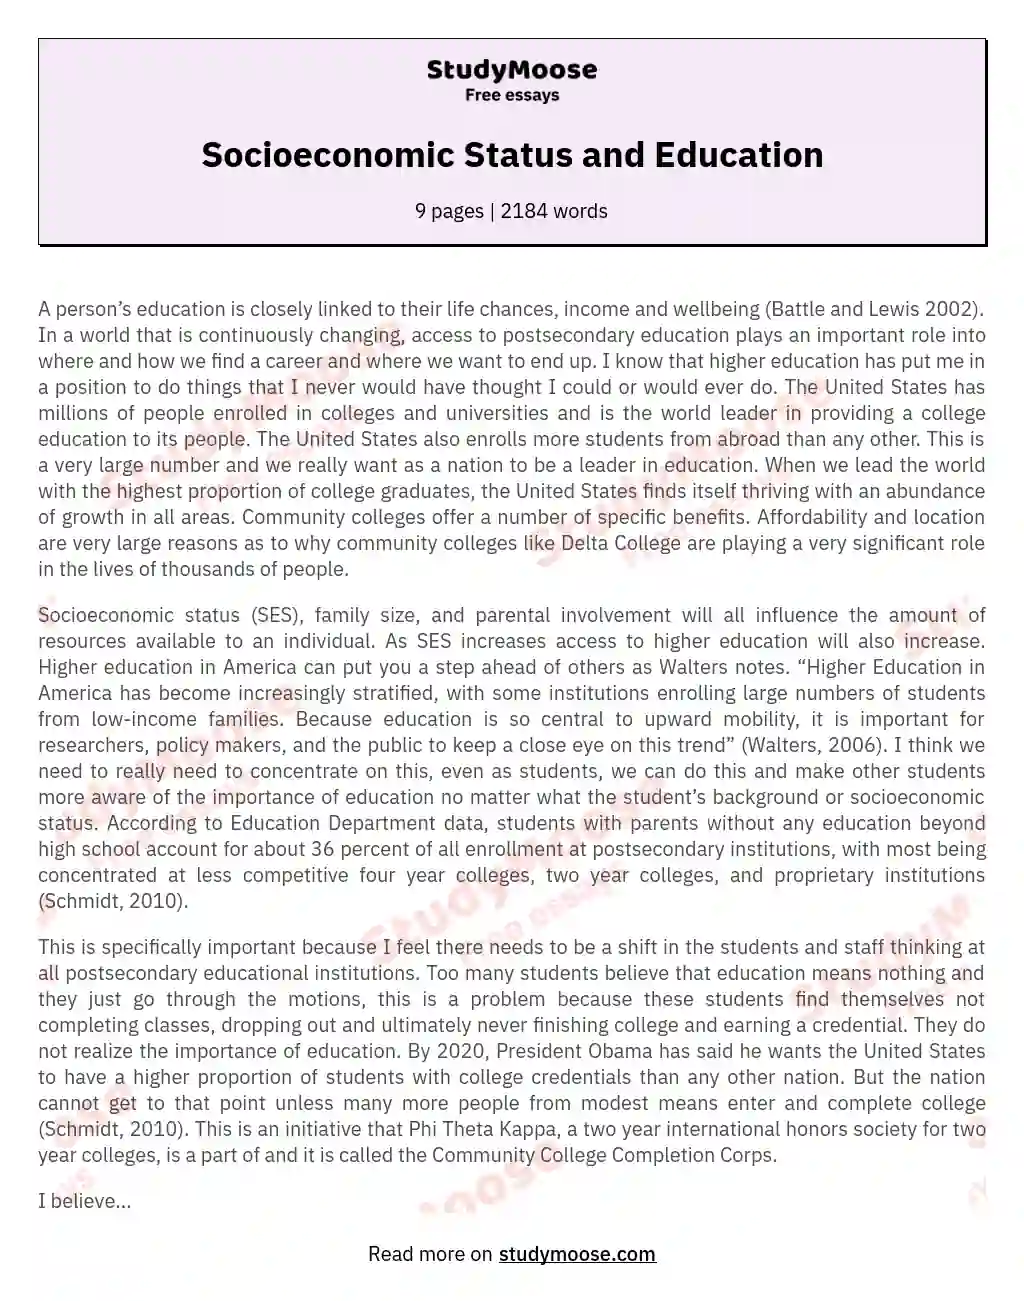 Socioeconomic Status and Education essay